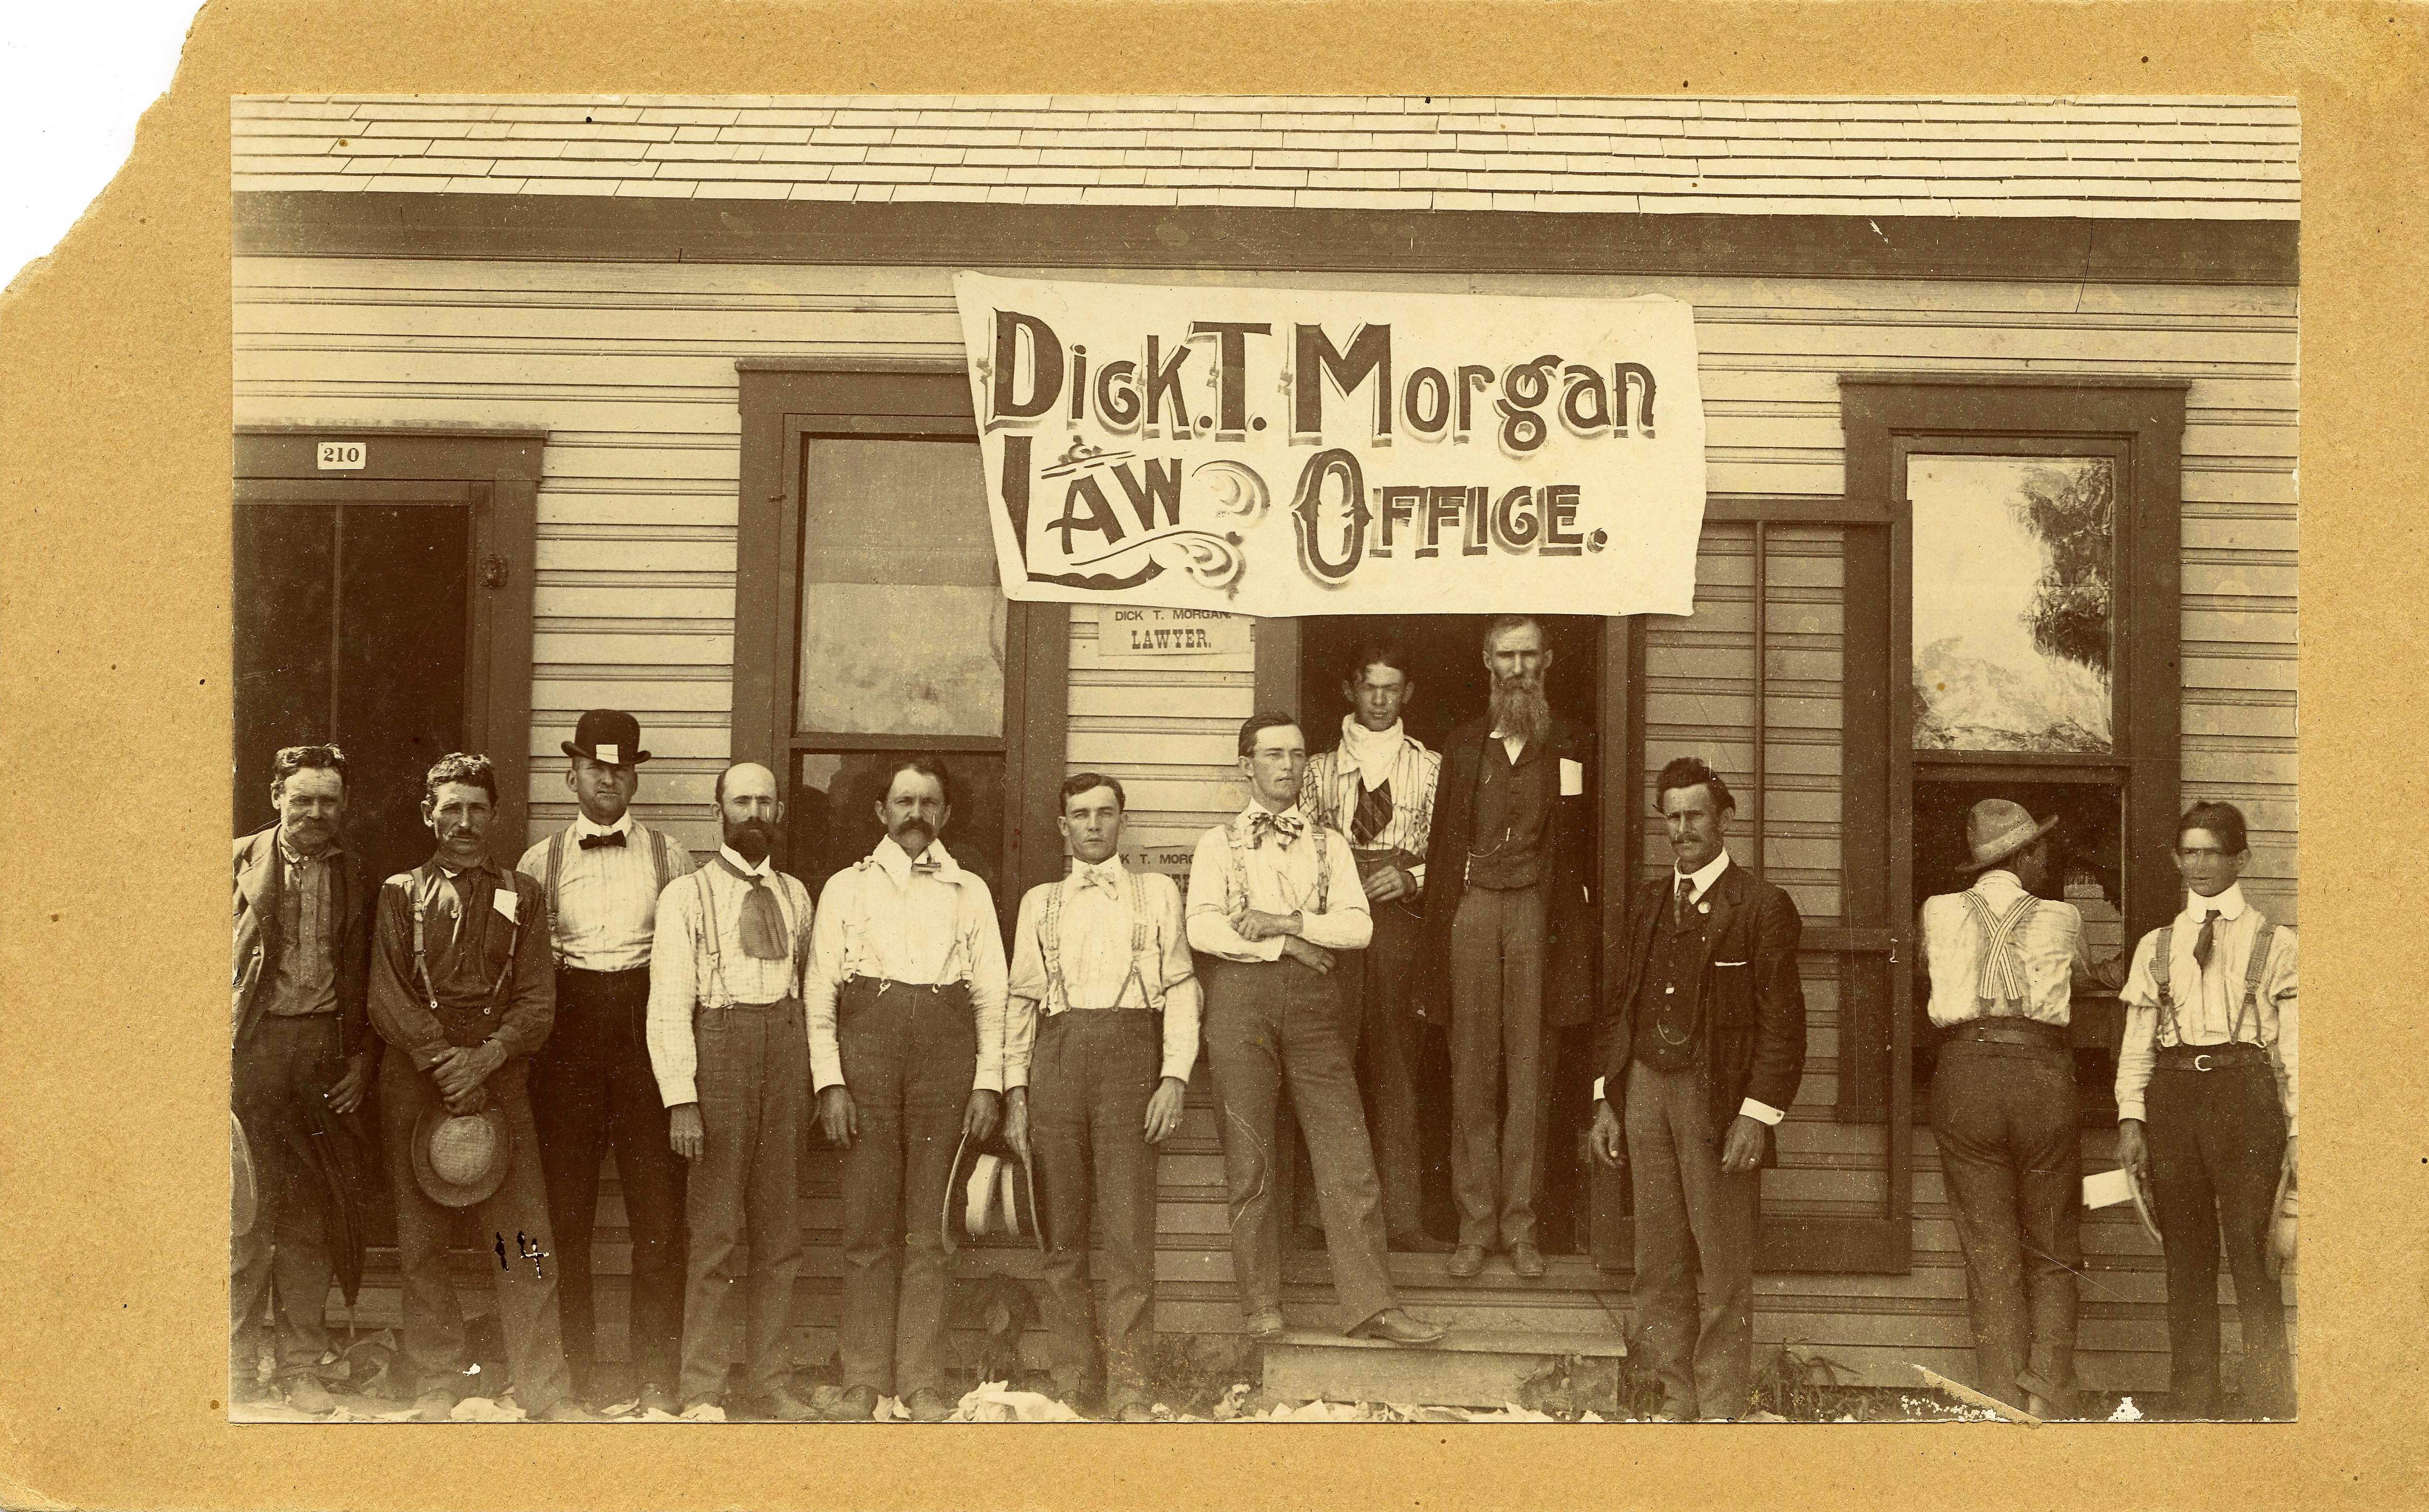 Dick T. Morgan's Law Office